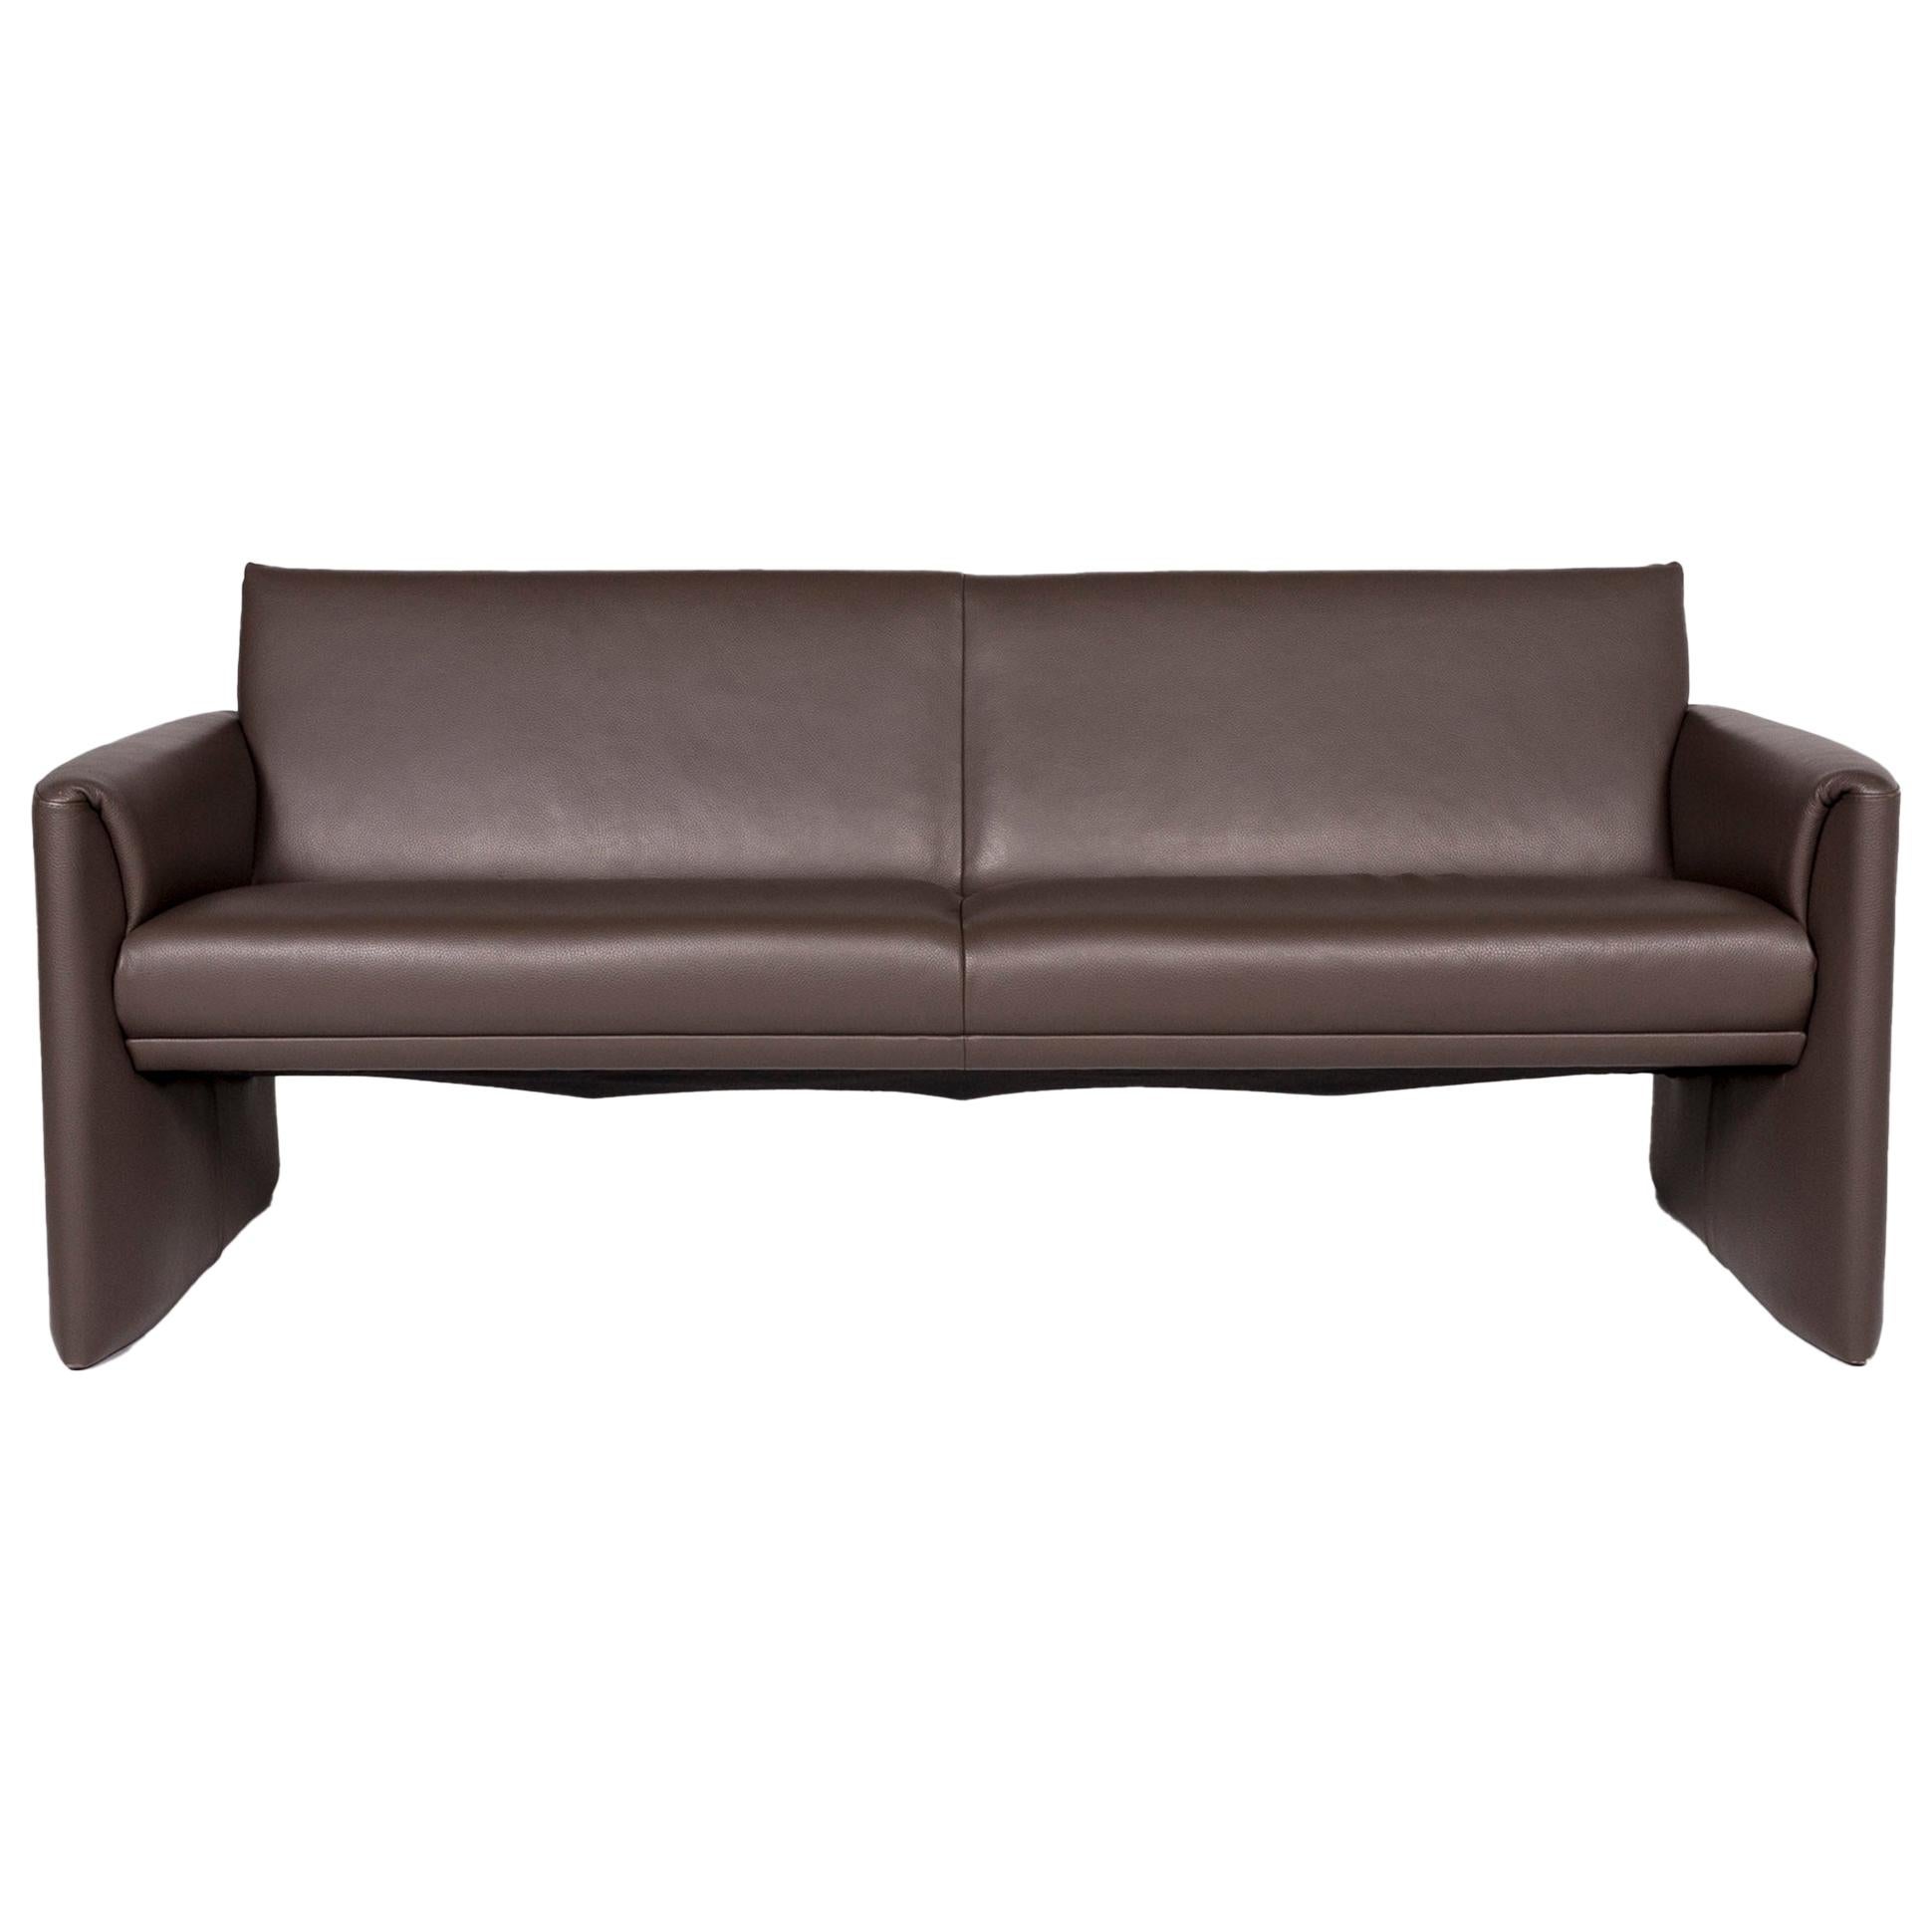 Leolux Boavista Leather Sofa Brown Three-Seat Couch For Sale